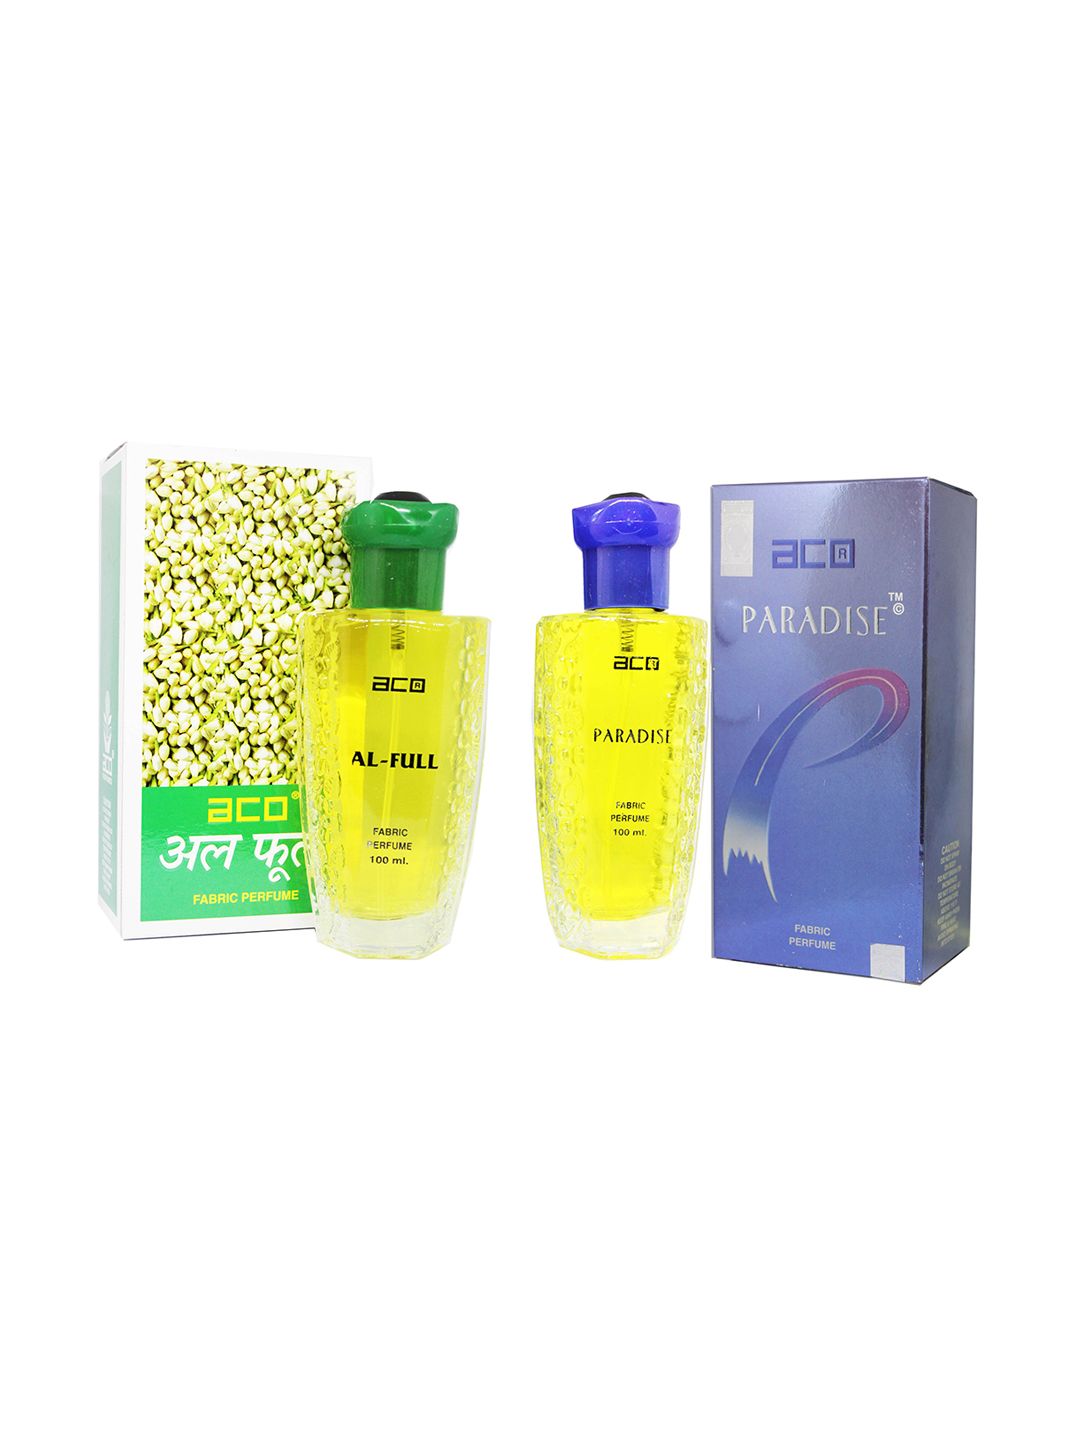 aco PERFUMES Alfull and Paradise Fabric Perfume Combo Set 100ml Price in India